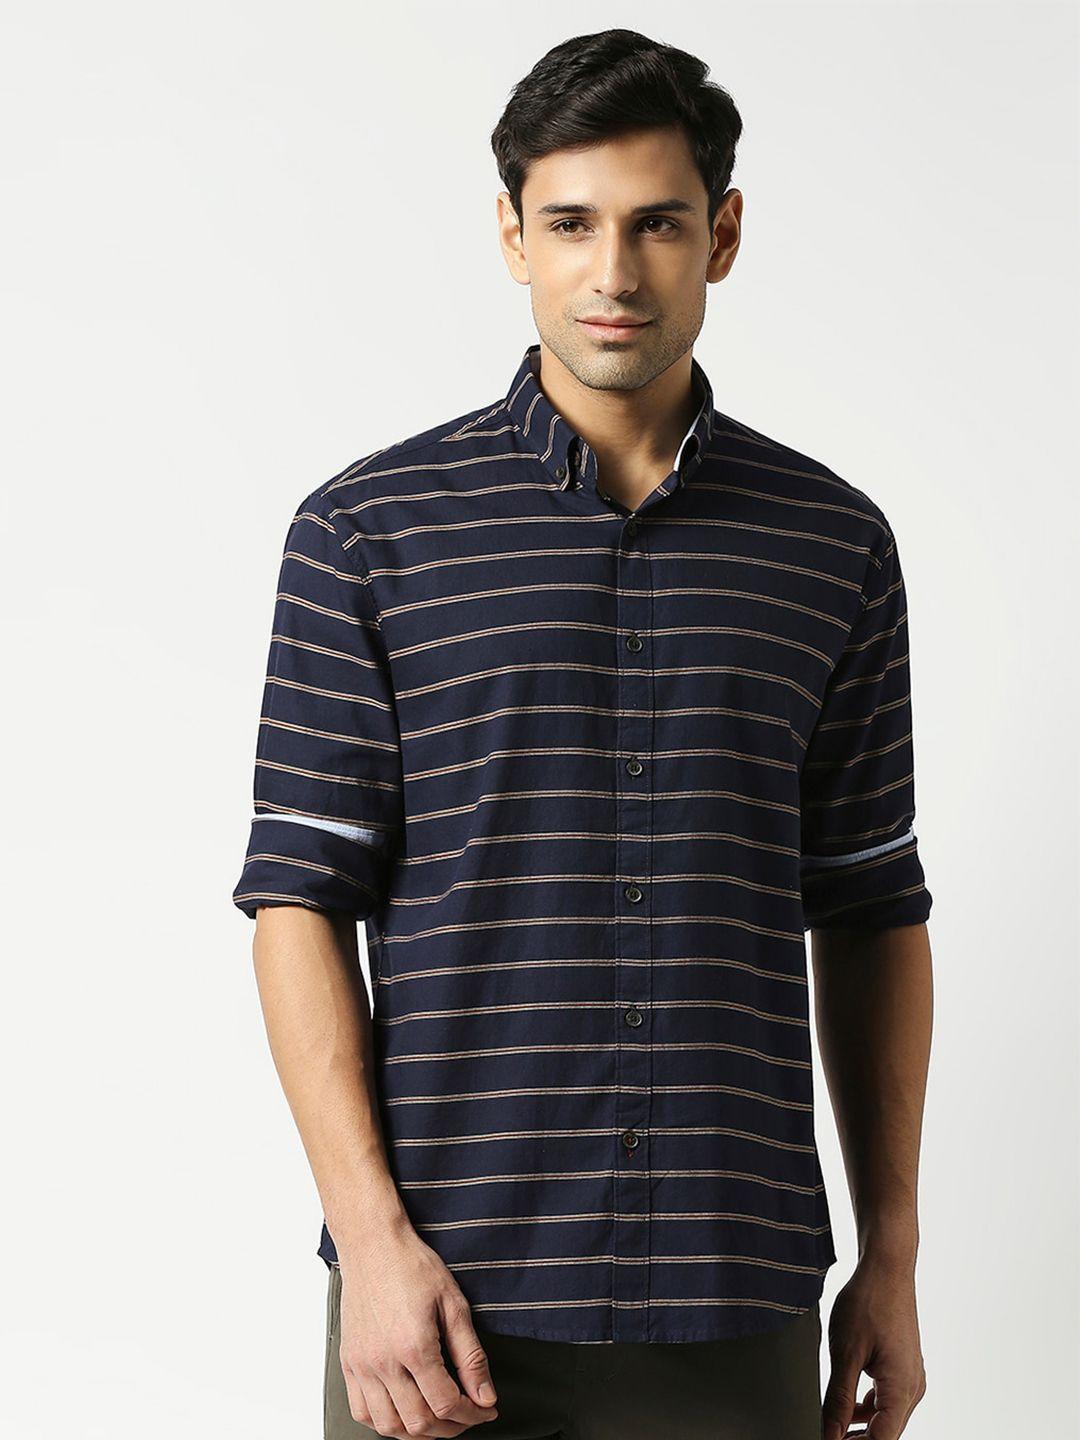 dragon hill horizontal striped slim fit oxford cotton casual shirt